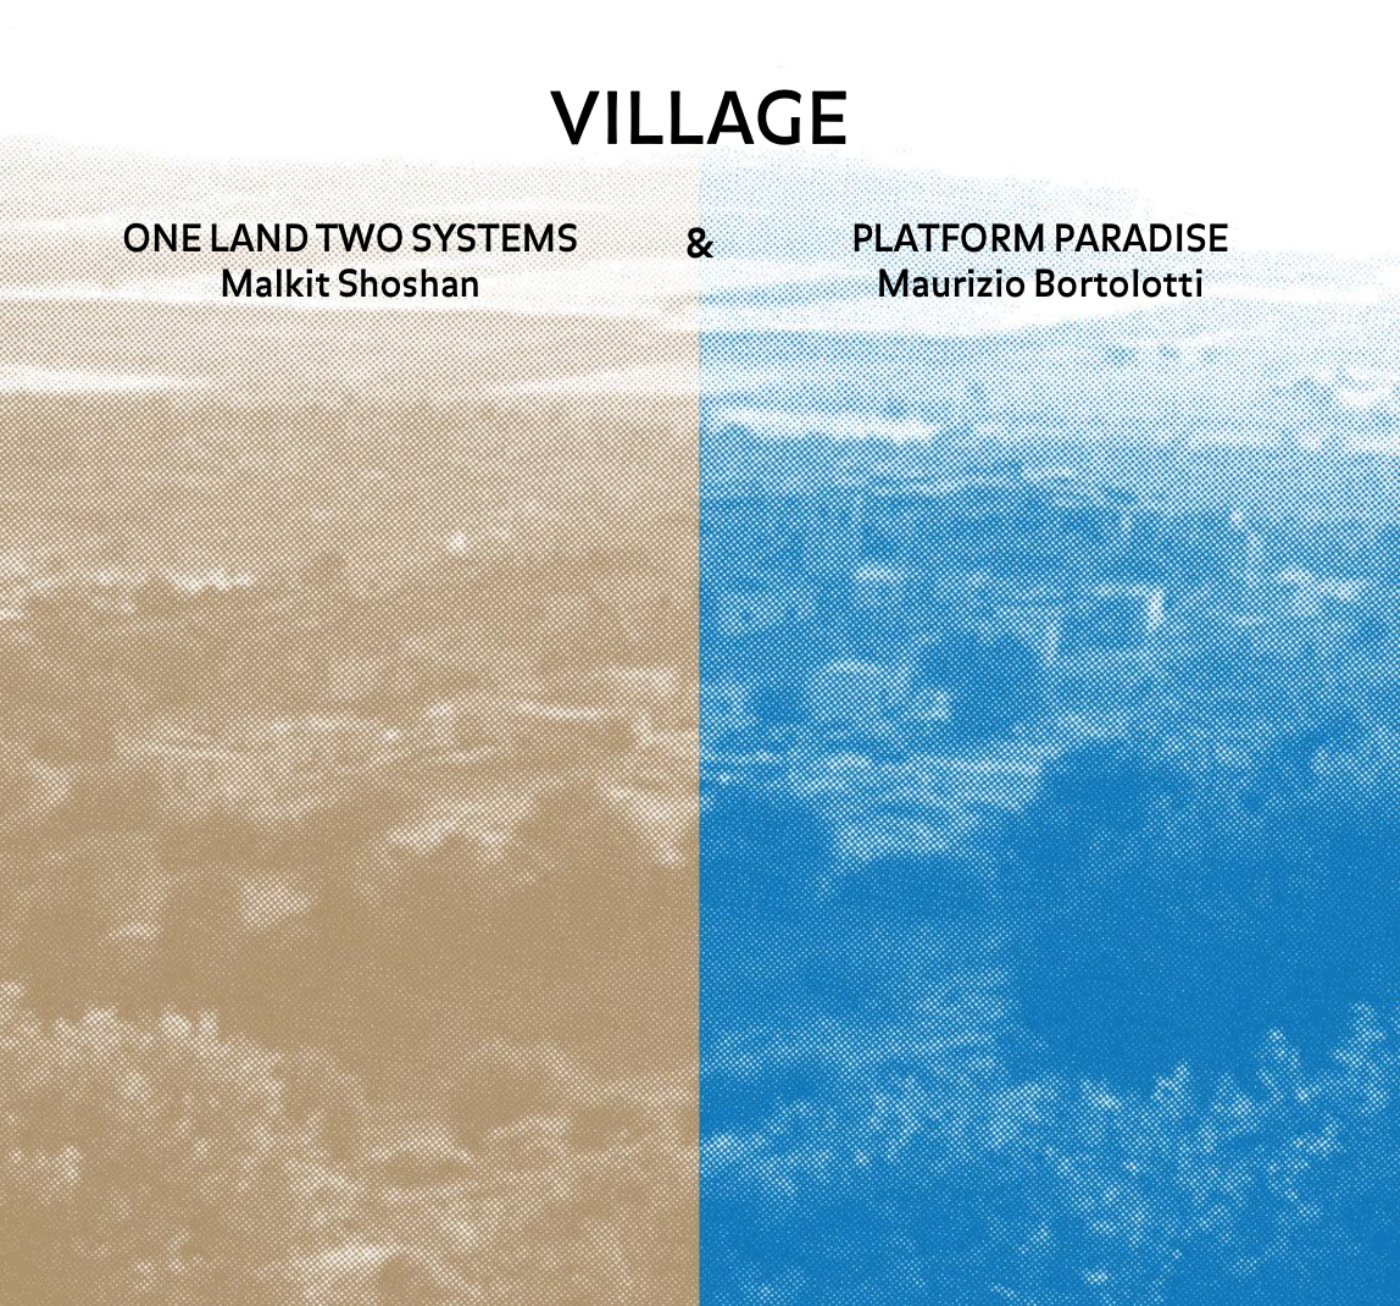 Village. One Land Two Systems and Platform Paradise by Malkit Shoshan and Maurizio Bortolotti